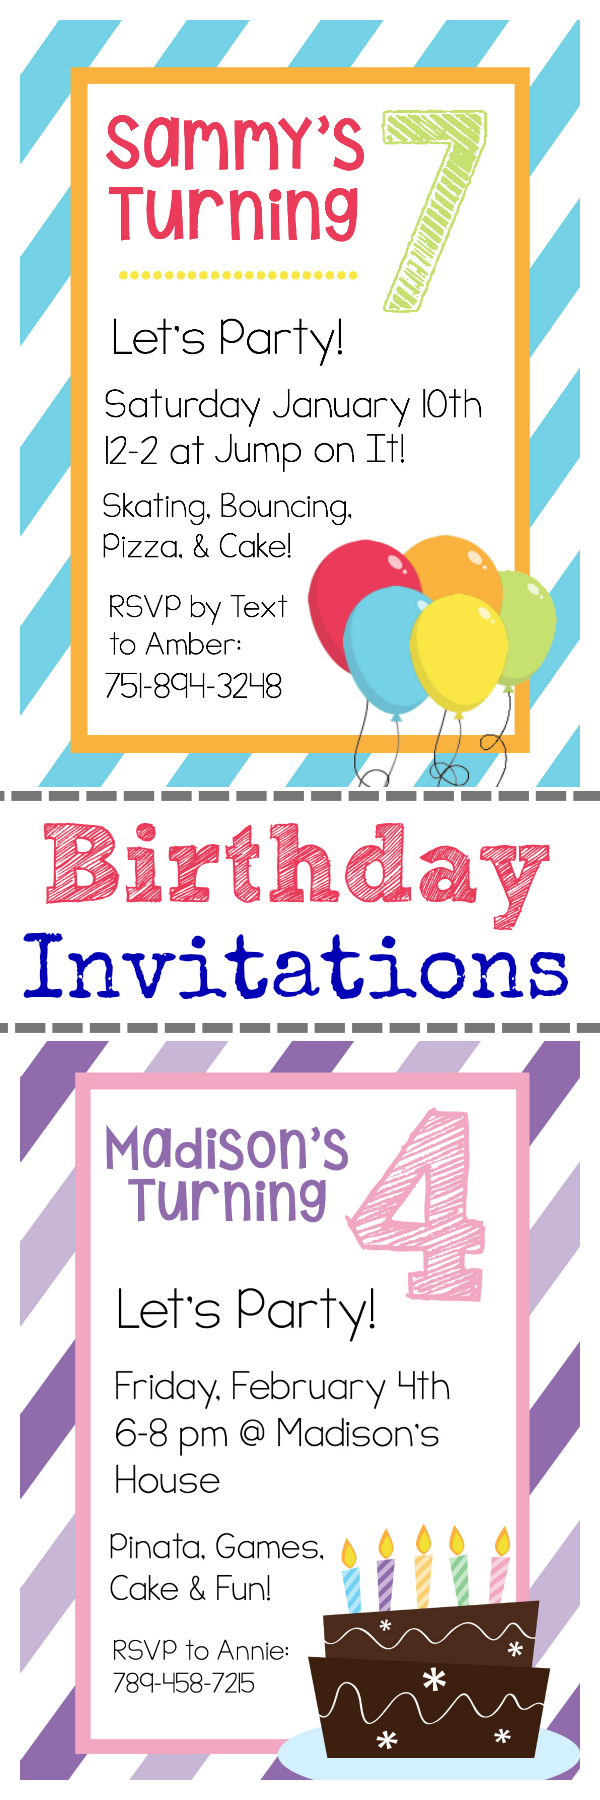 Free Printable Birthday Invitation Templates - Free Printable Birthday Invitations For Kids